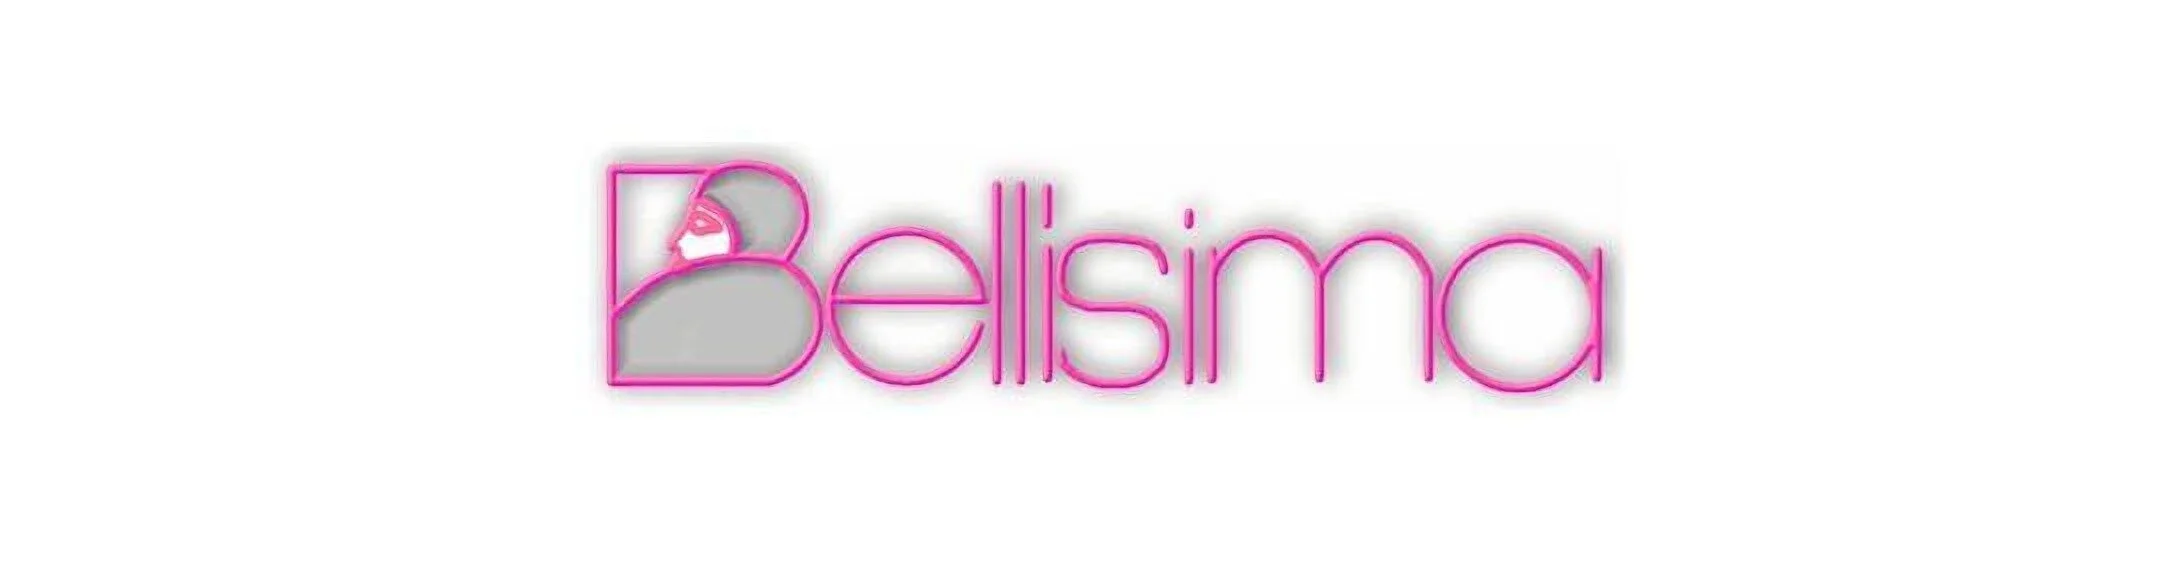 BELLISIMA - Instituto de Belleza Bogota-146